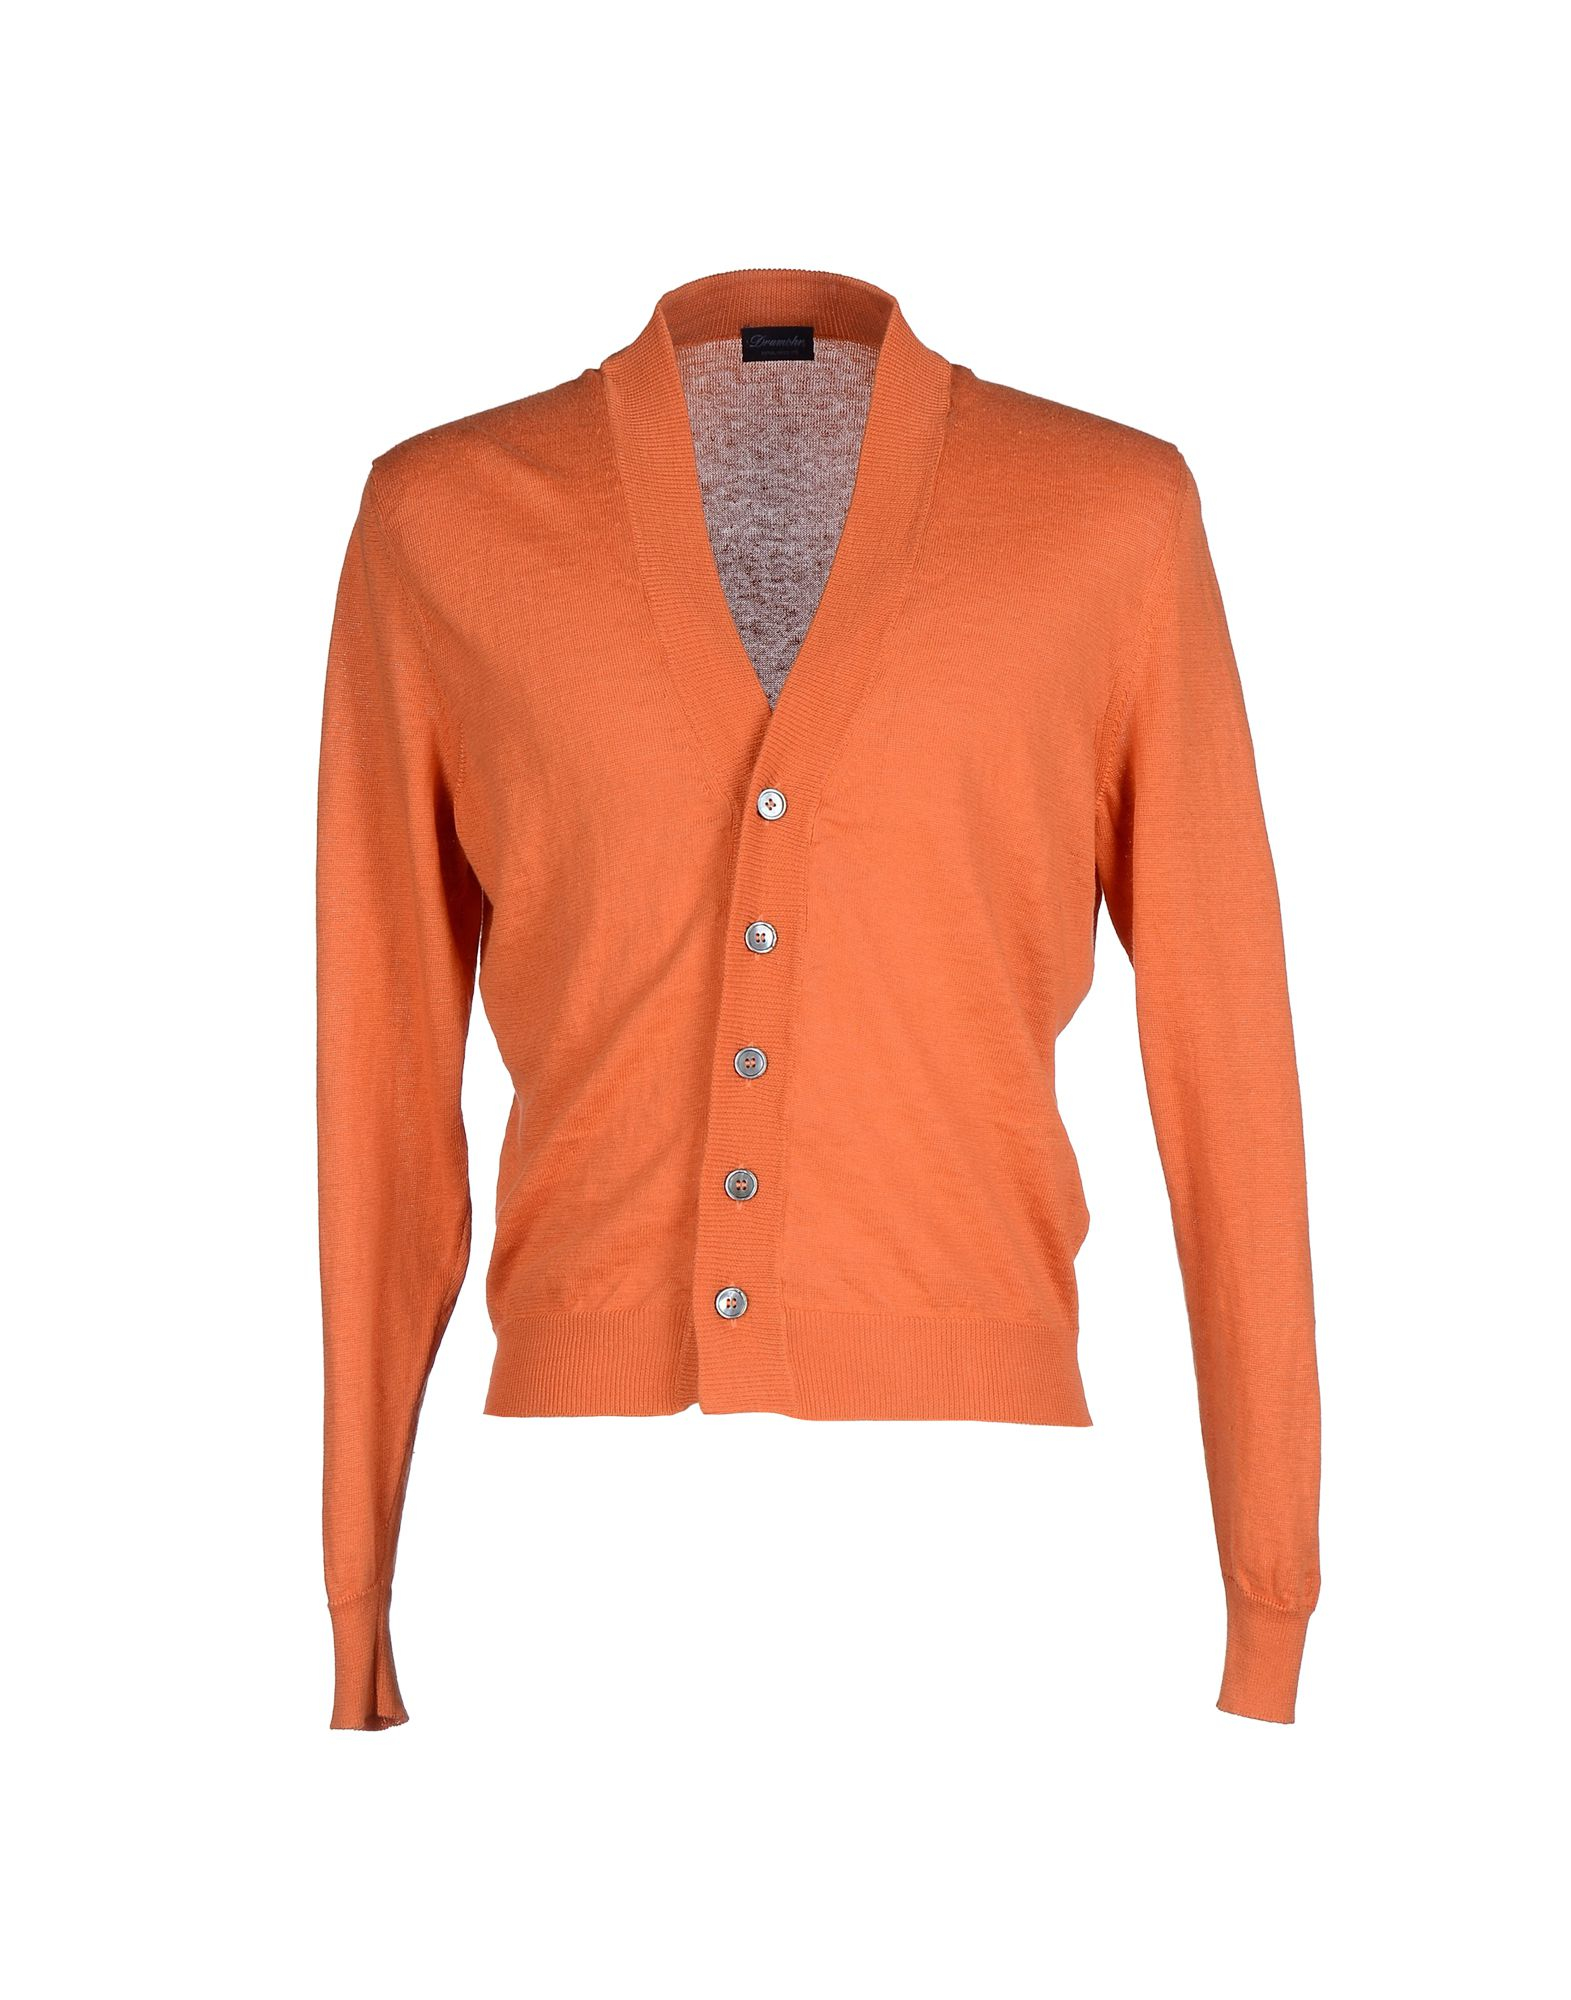 Lyst - Drumohr V-Neck Linen Cardigan in Orange for Men